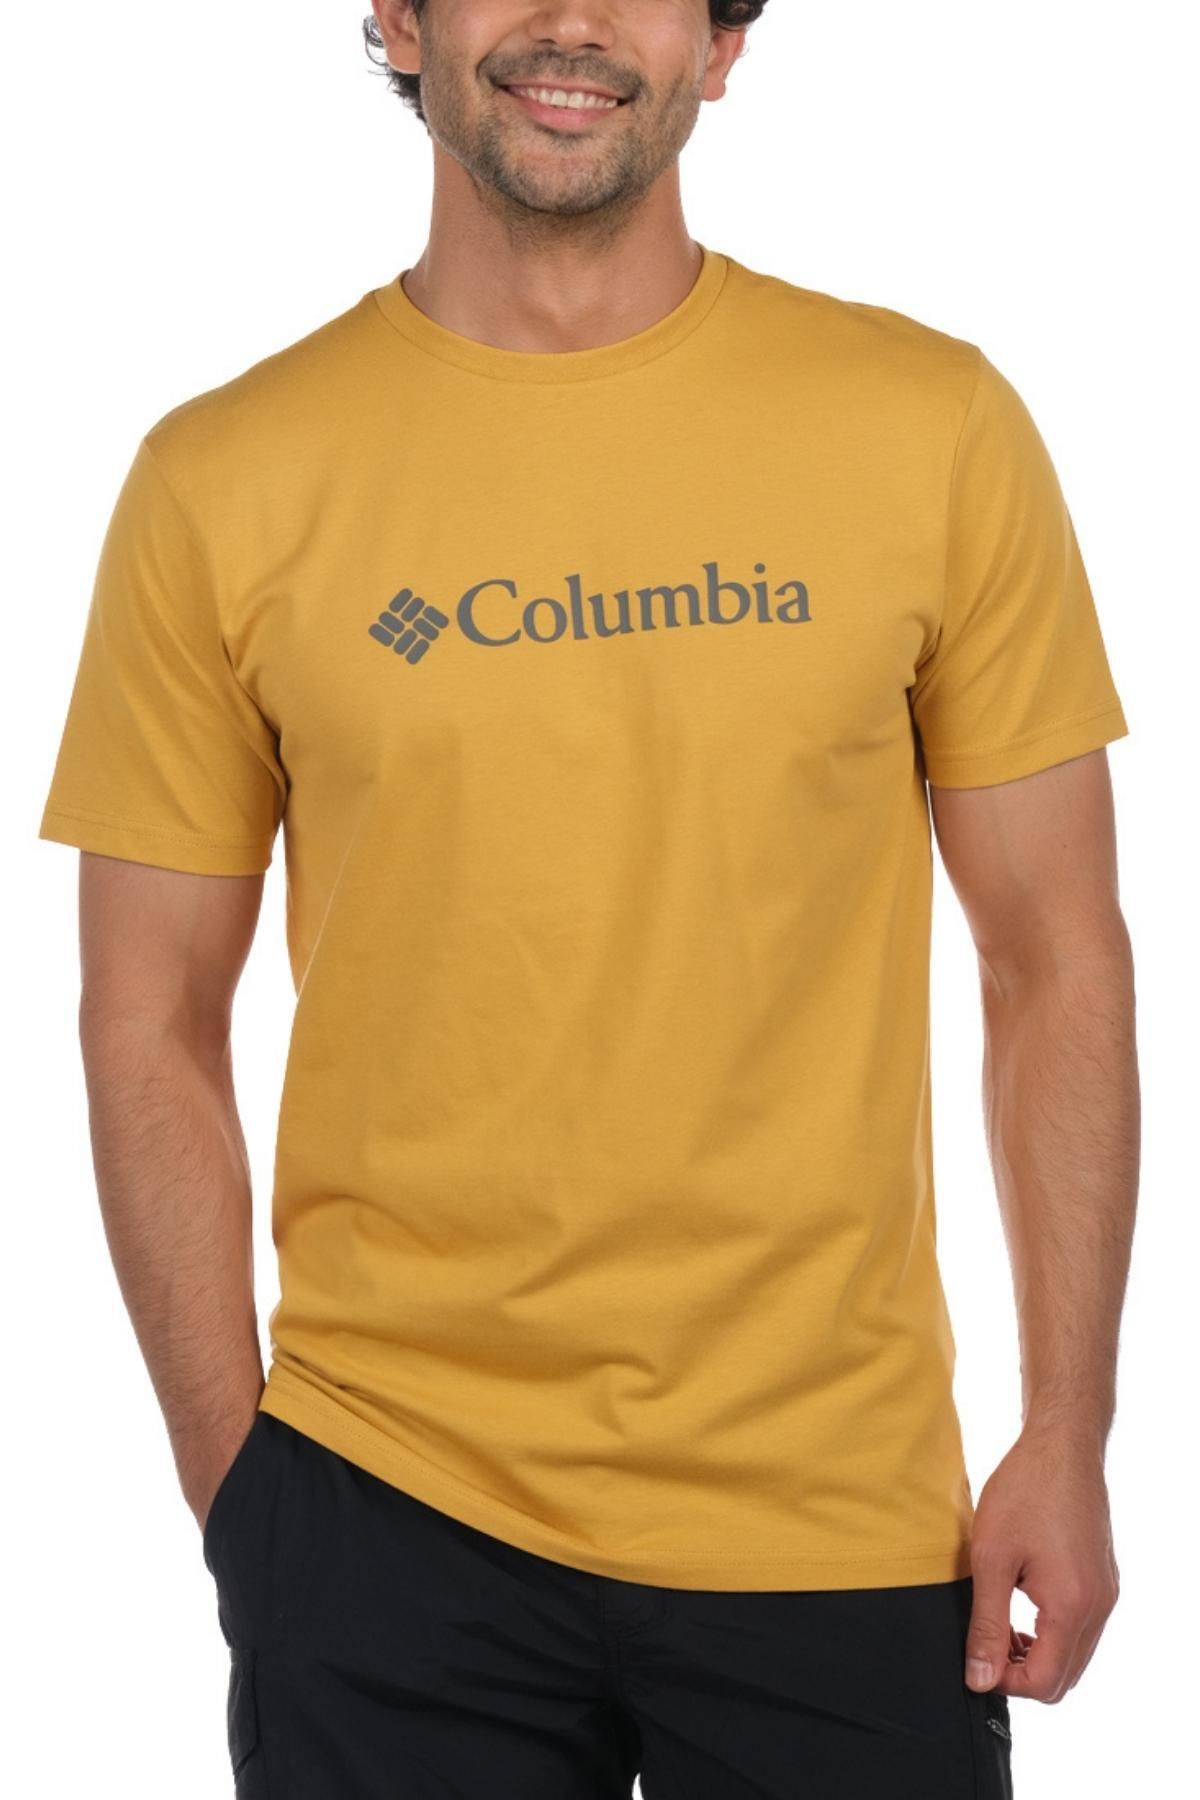 Columbia Erkek Sarı T-shirt 1680050718-718